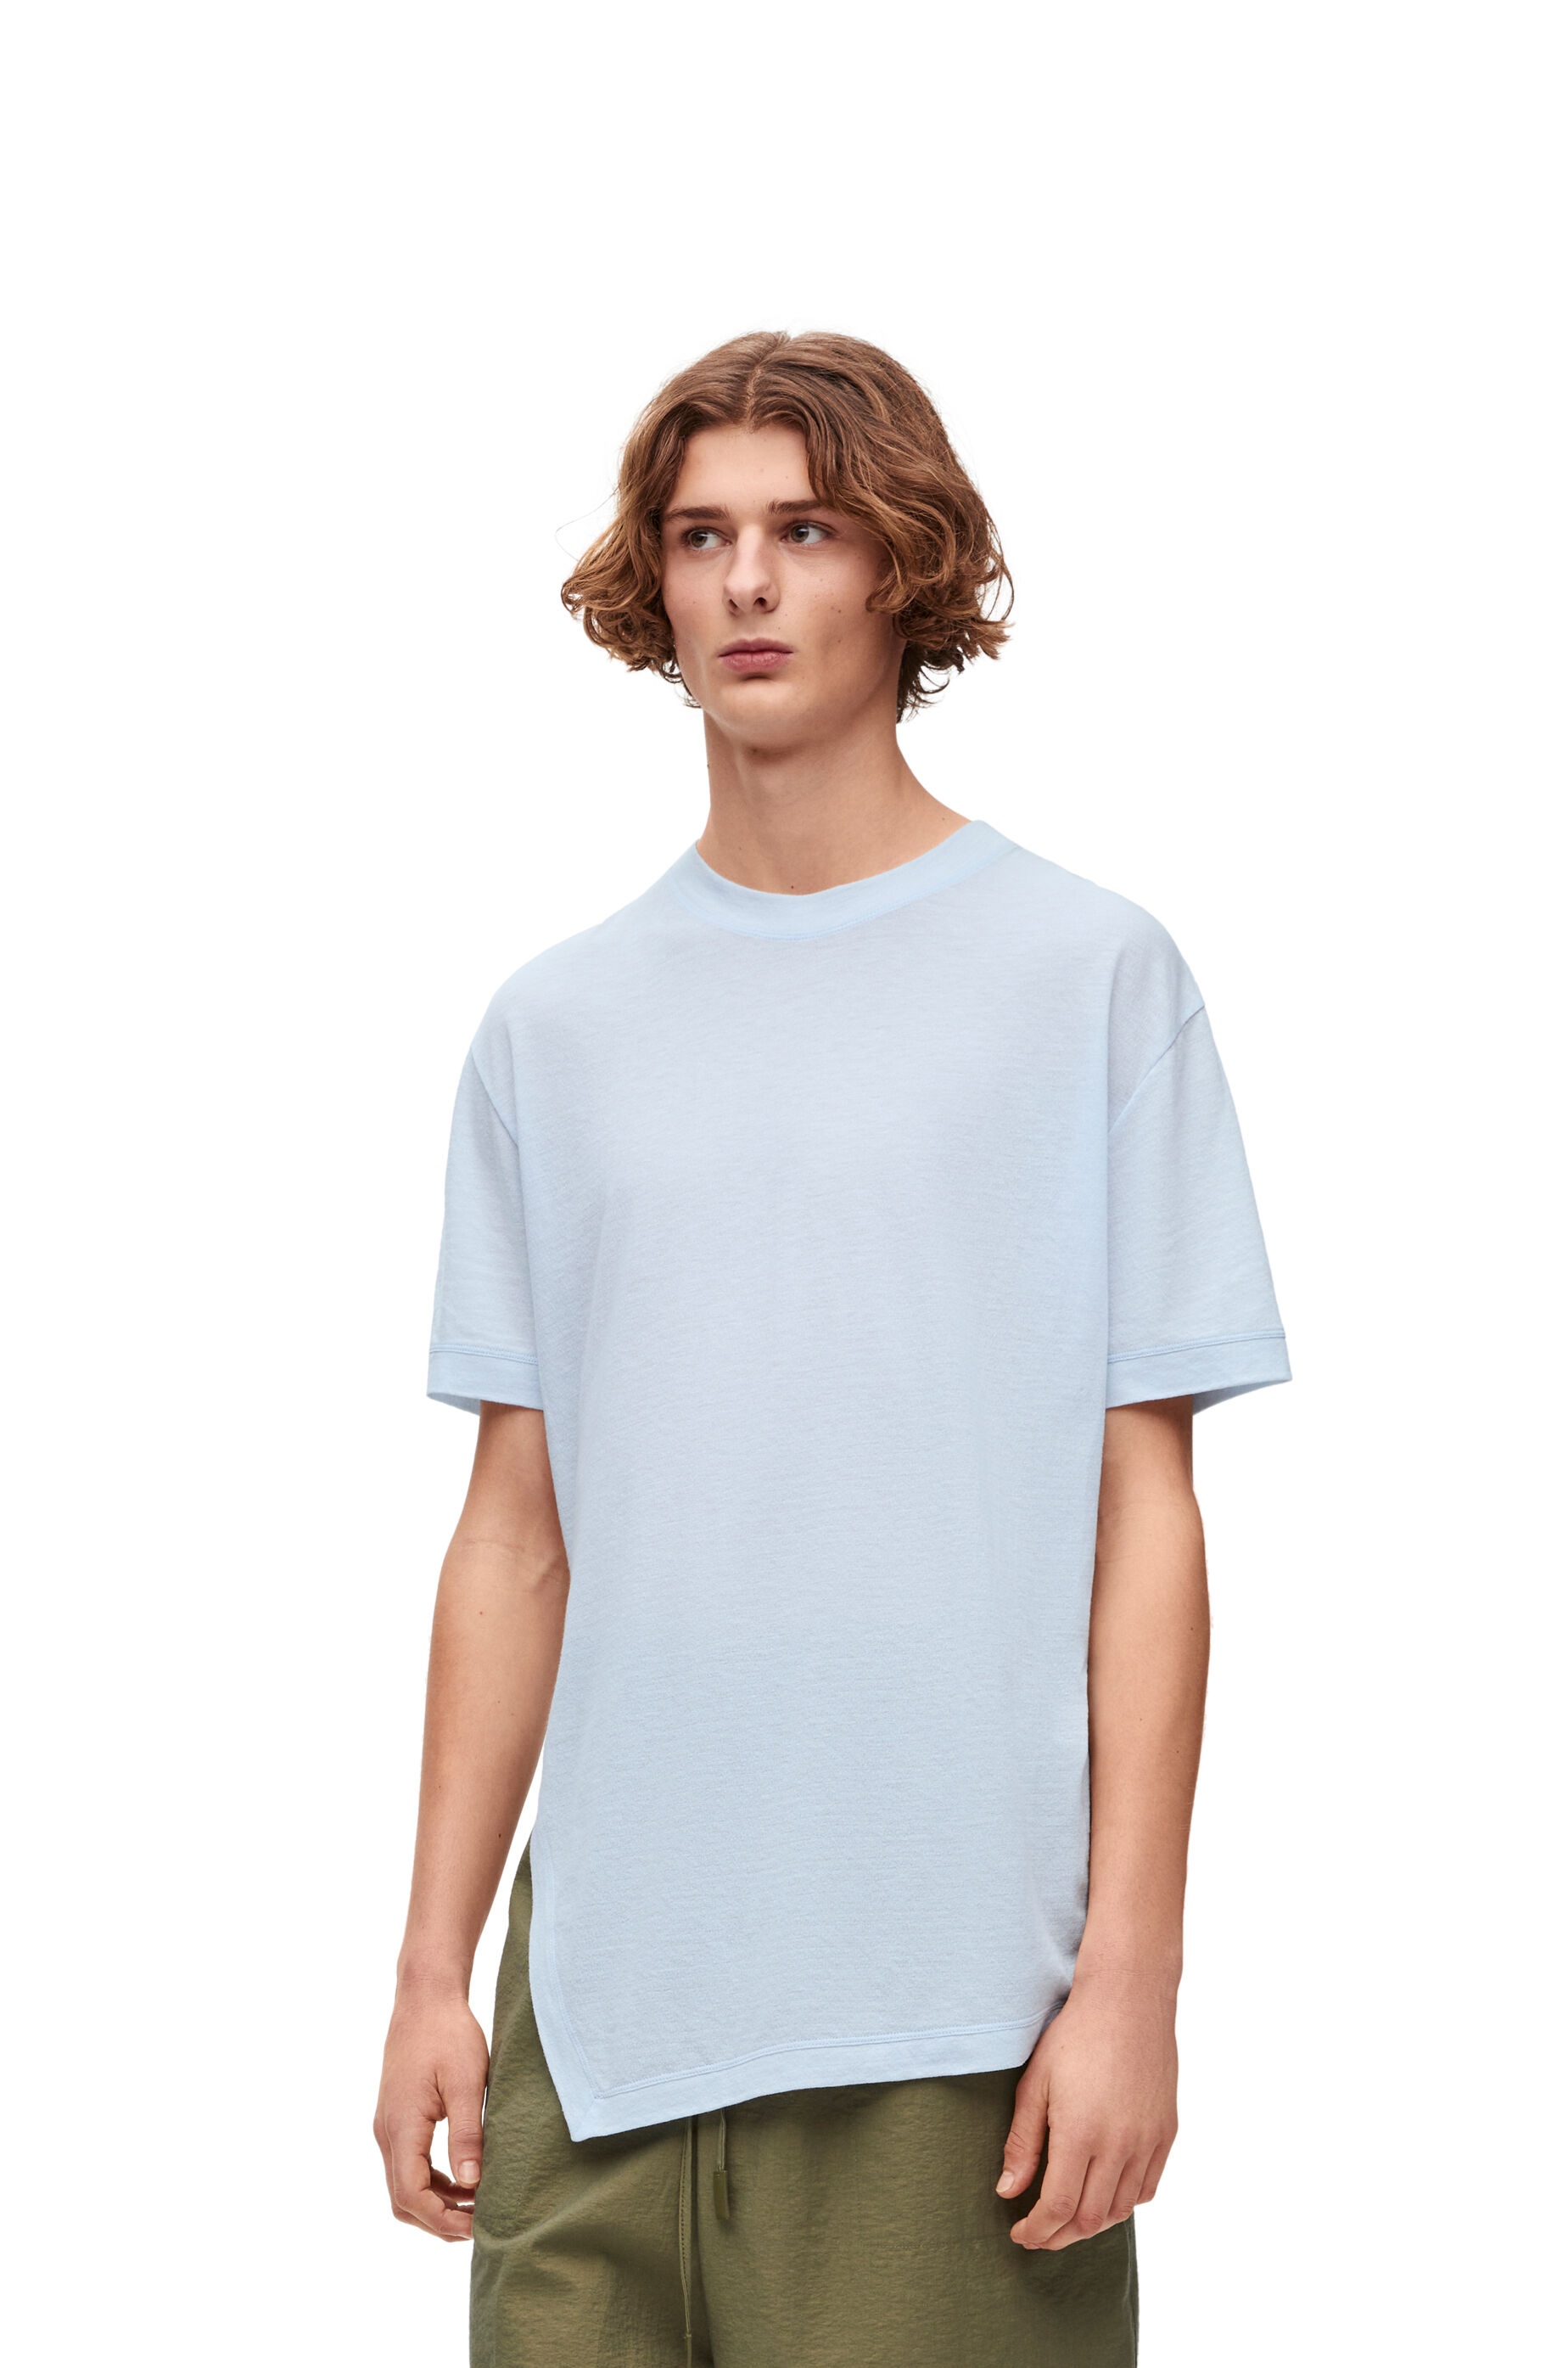 Asymmetric T-shirt in cotton blend - 3